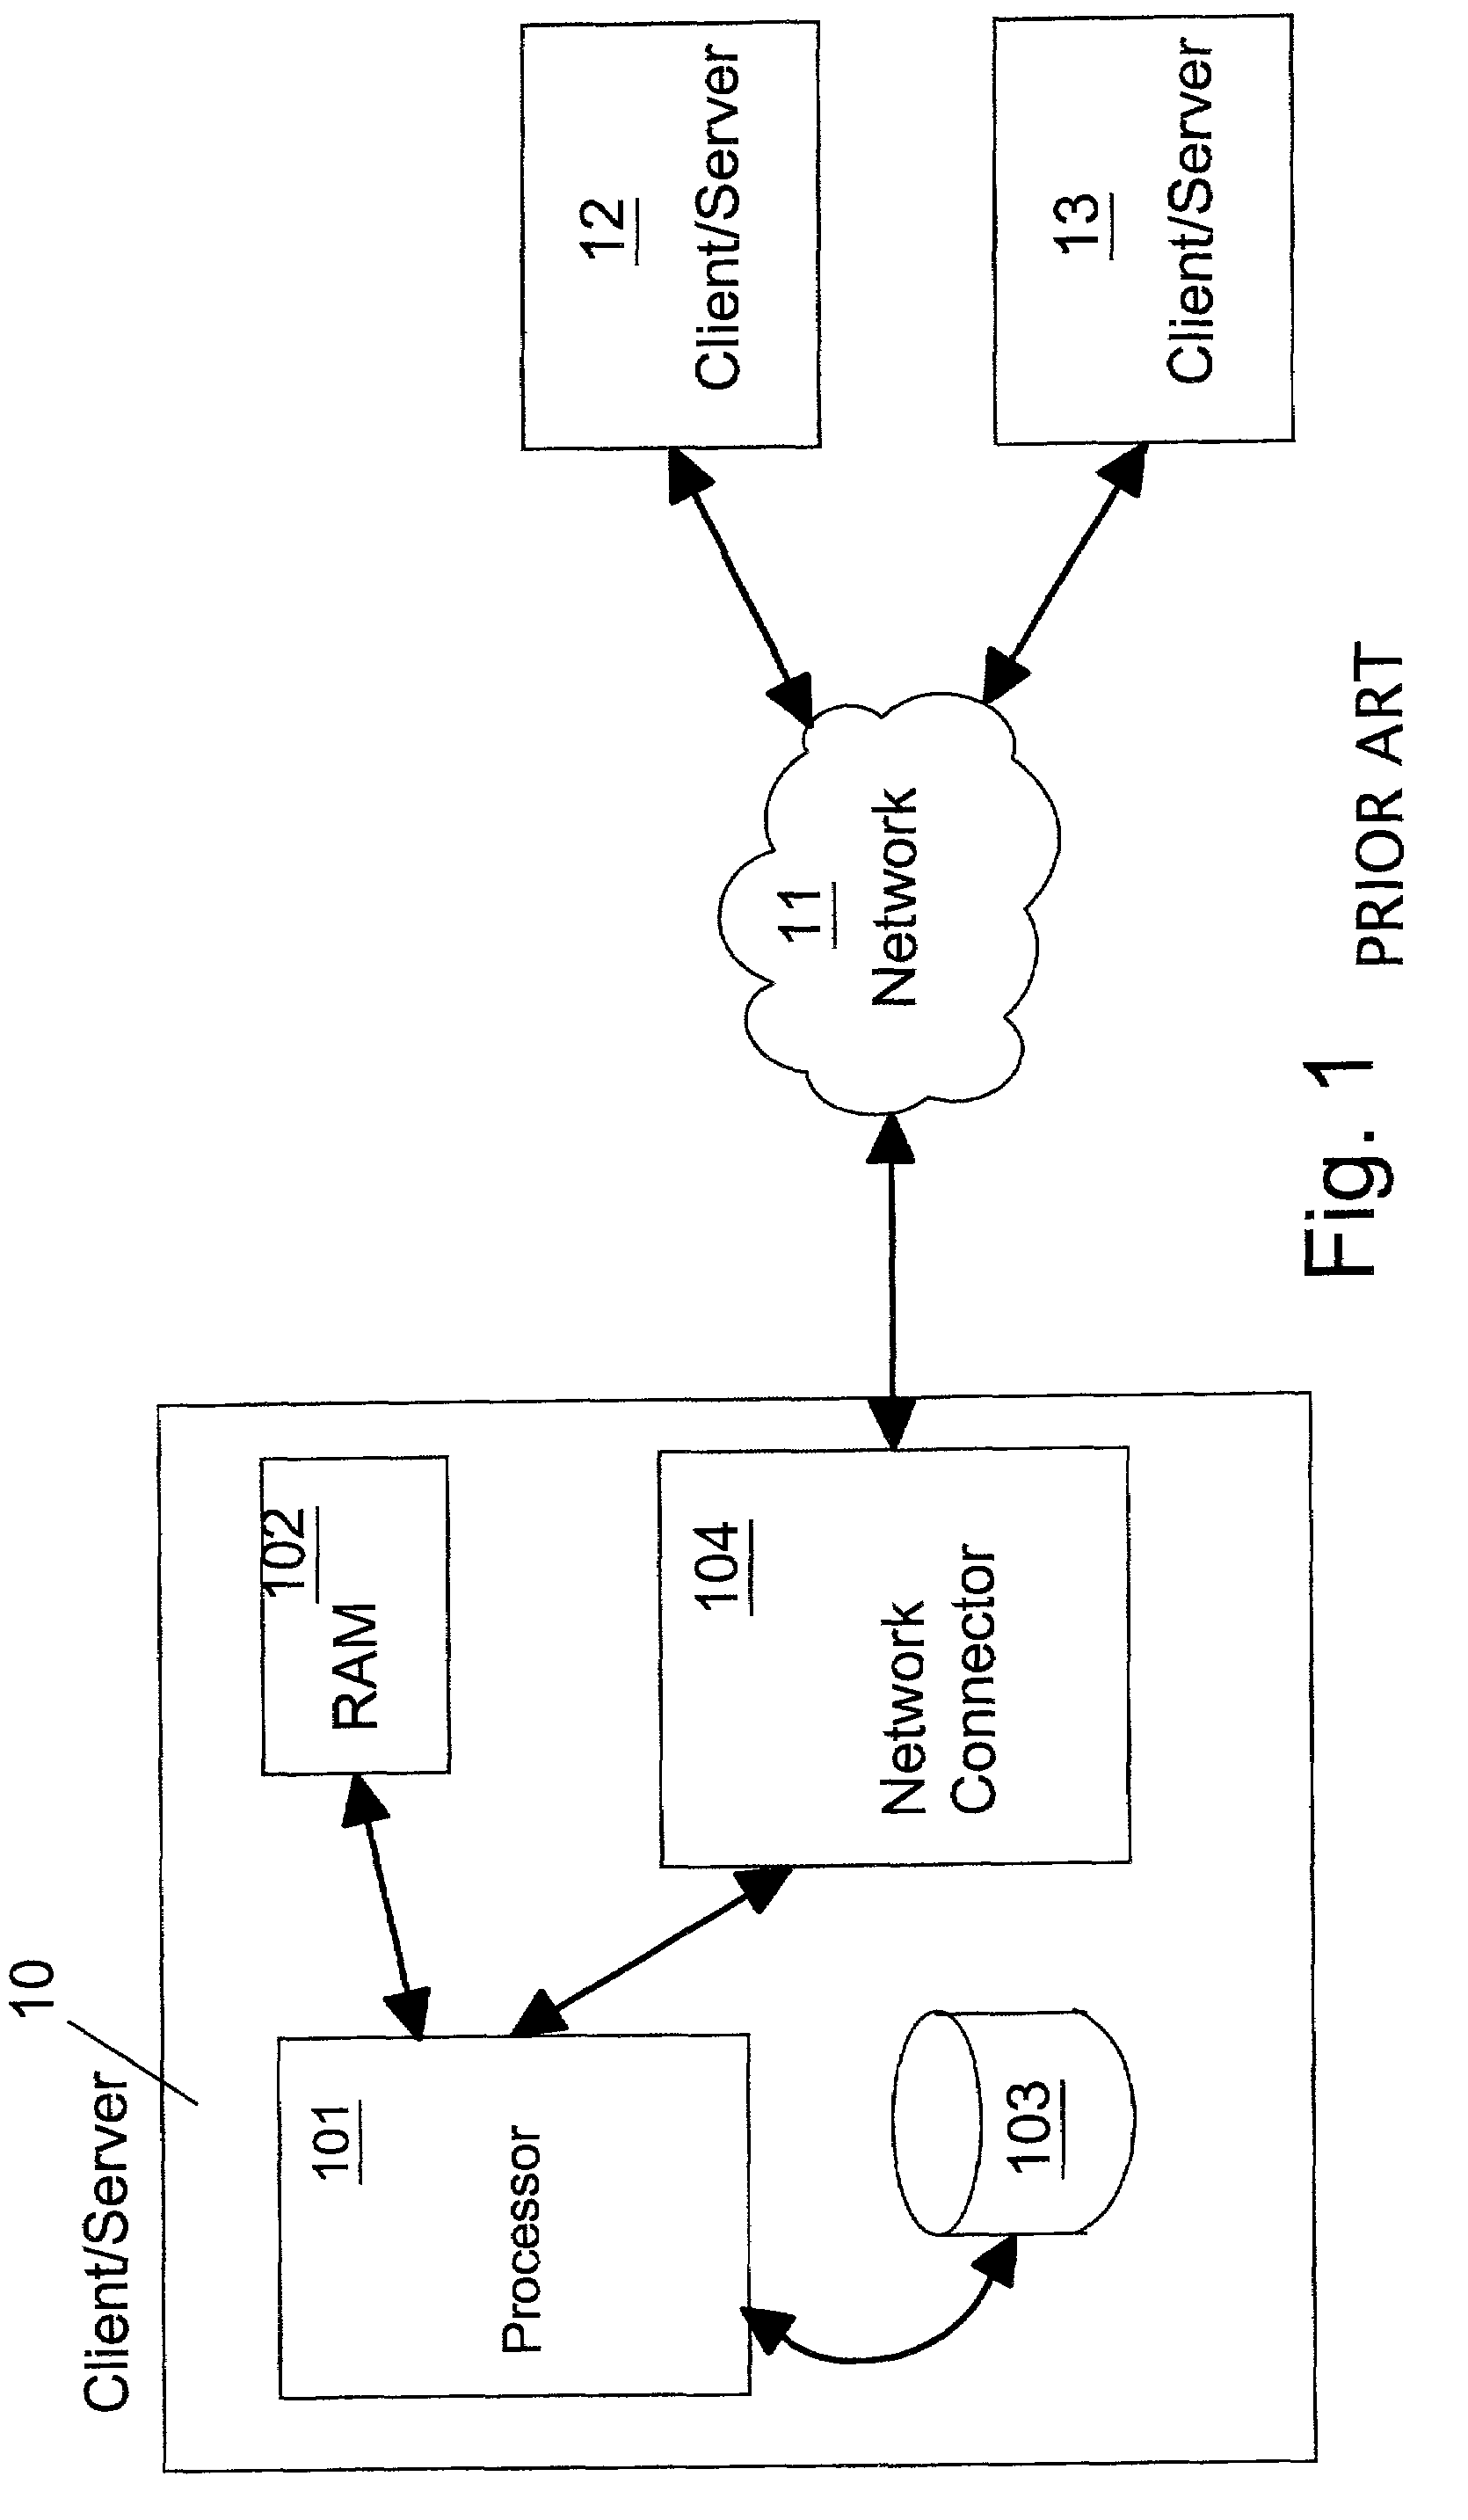 Flexible navigation of a workflow graph